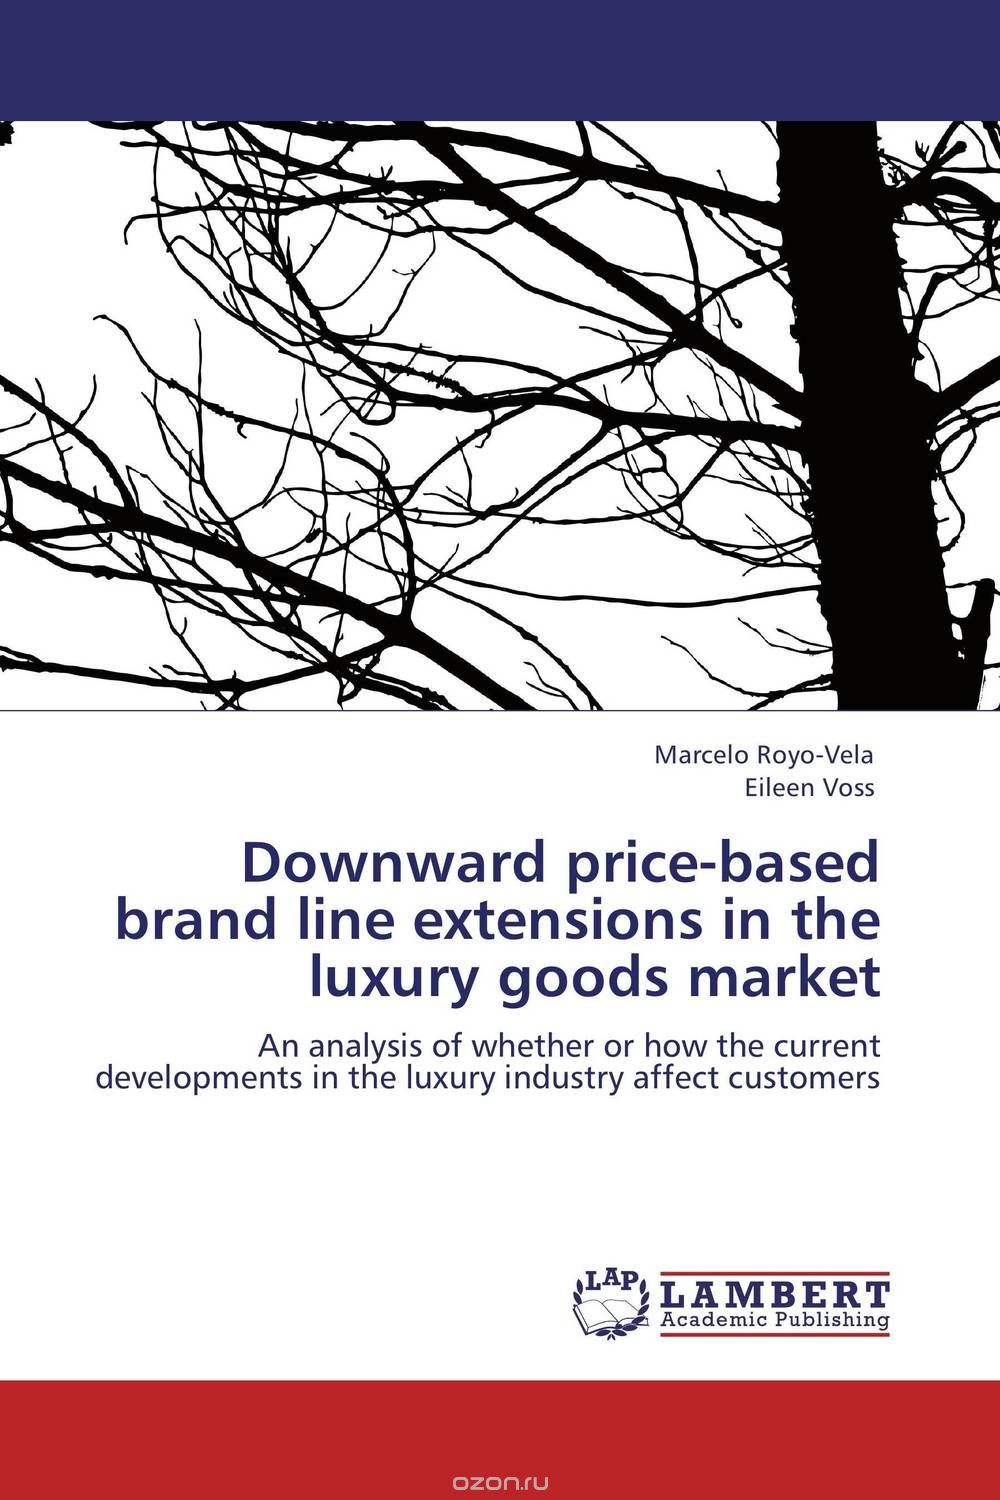 Скачать книгу "Downward price-based brand line extensions in the luxury goods market"